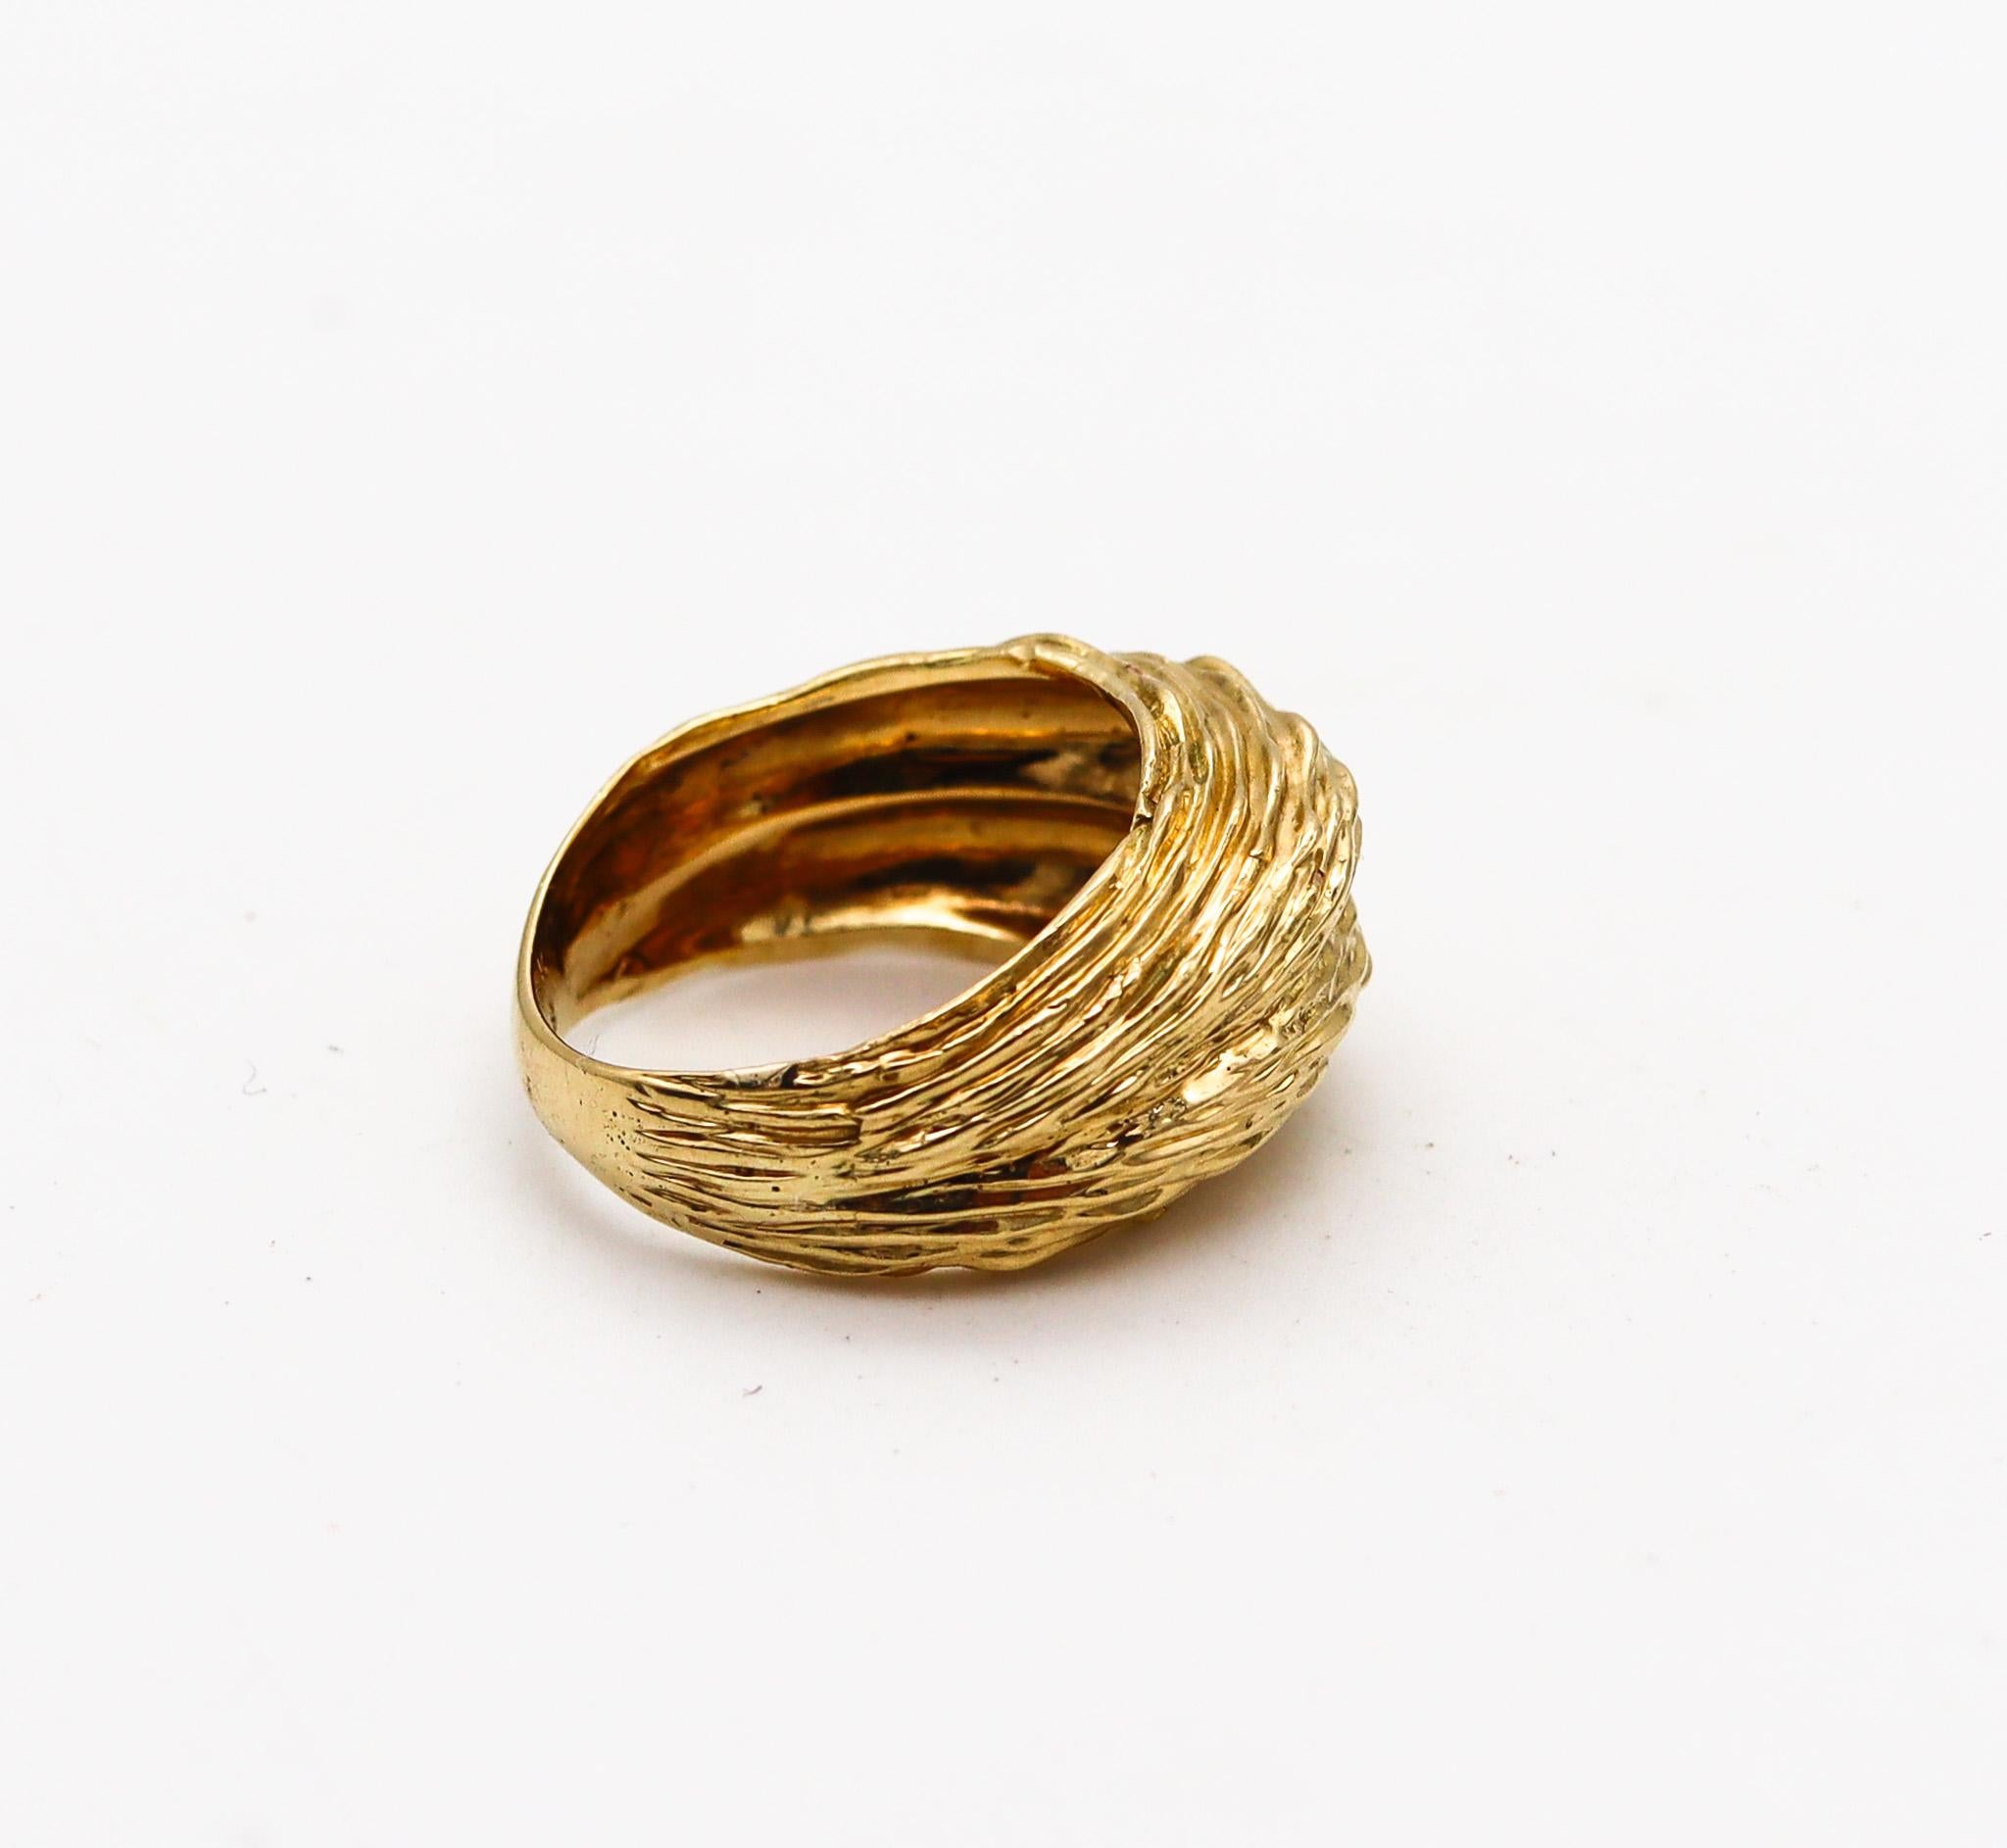 Women's Van Cleef & Arpels 1970 Textured Cocktail Ring in Solid 18Kt Yellow Gold